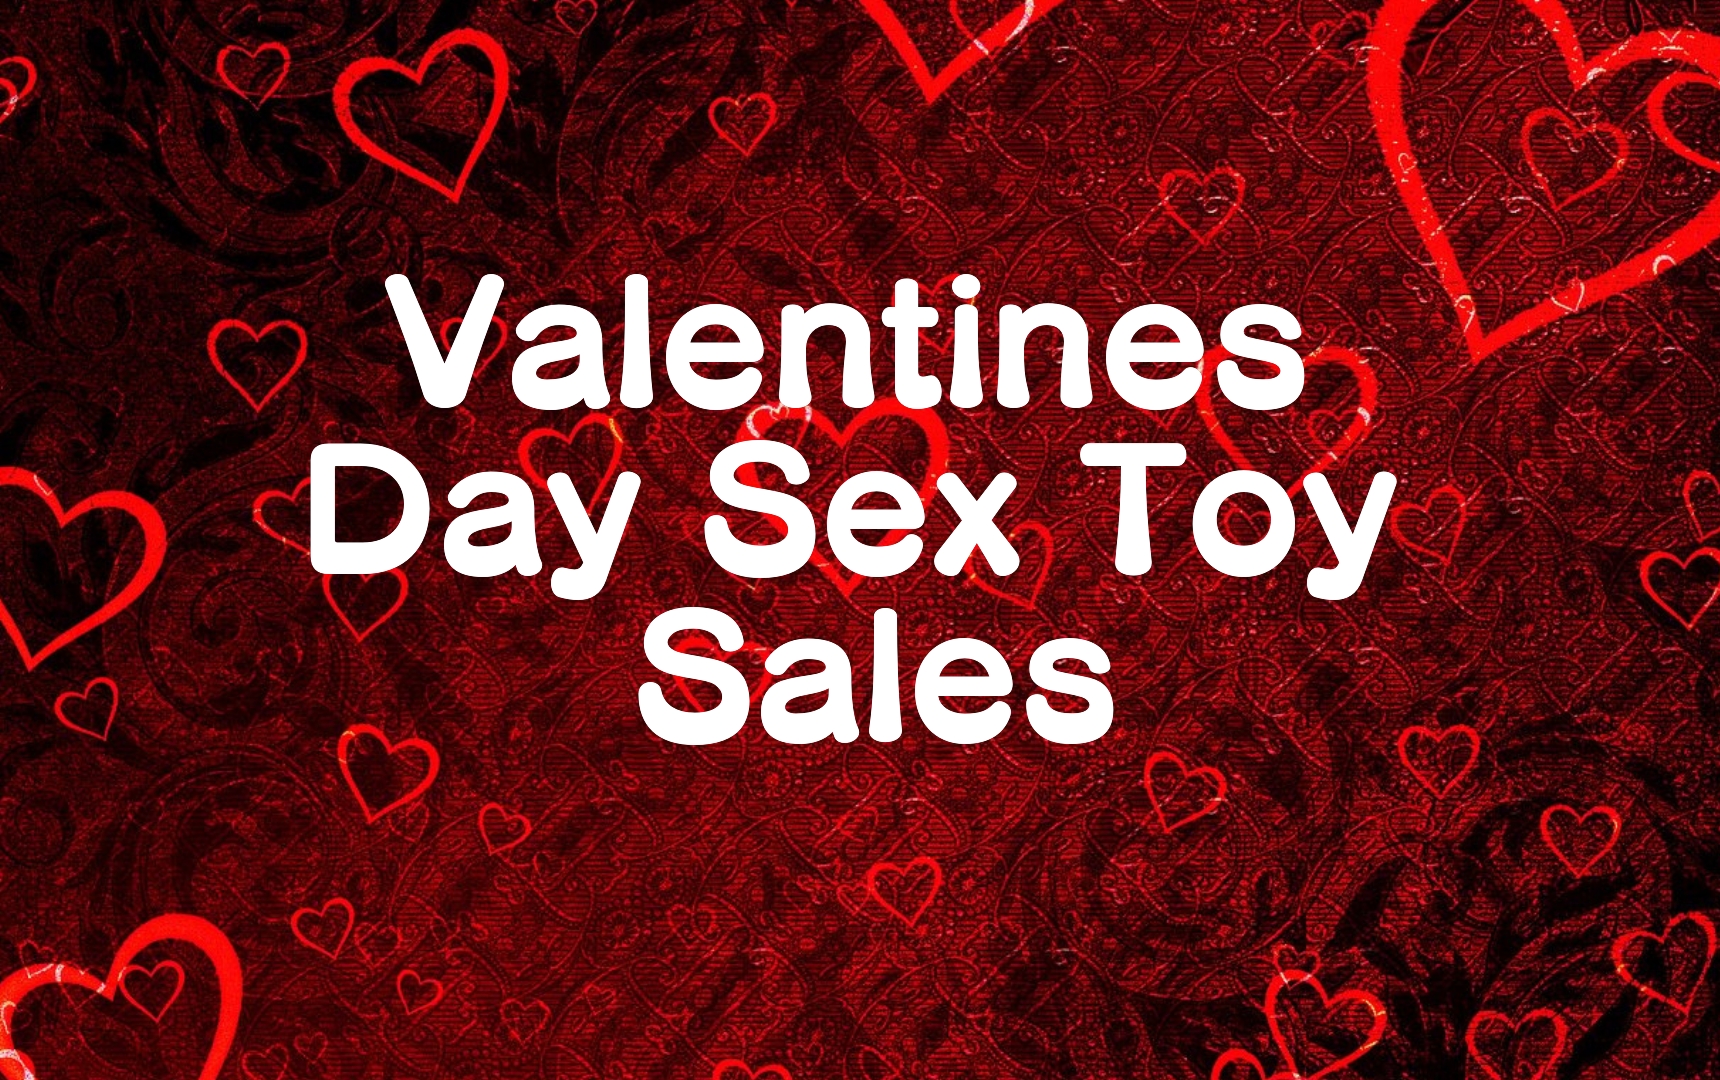 alt="Best Valentines Day Sex Toy Sales And Deals"